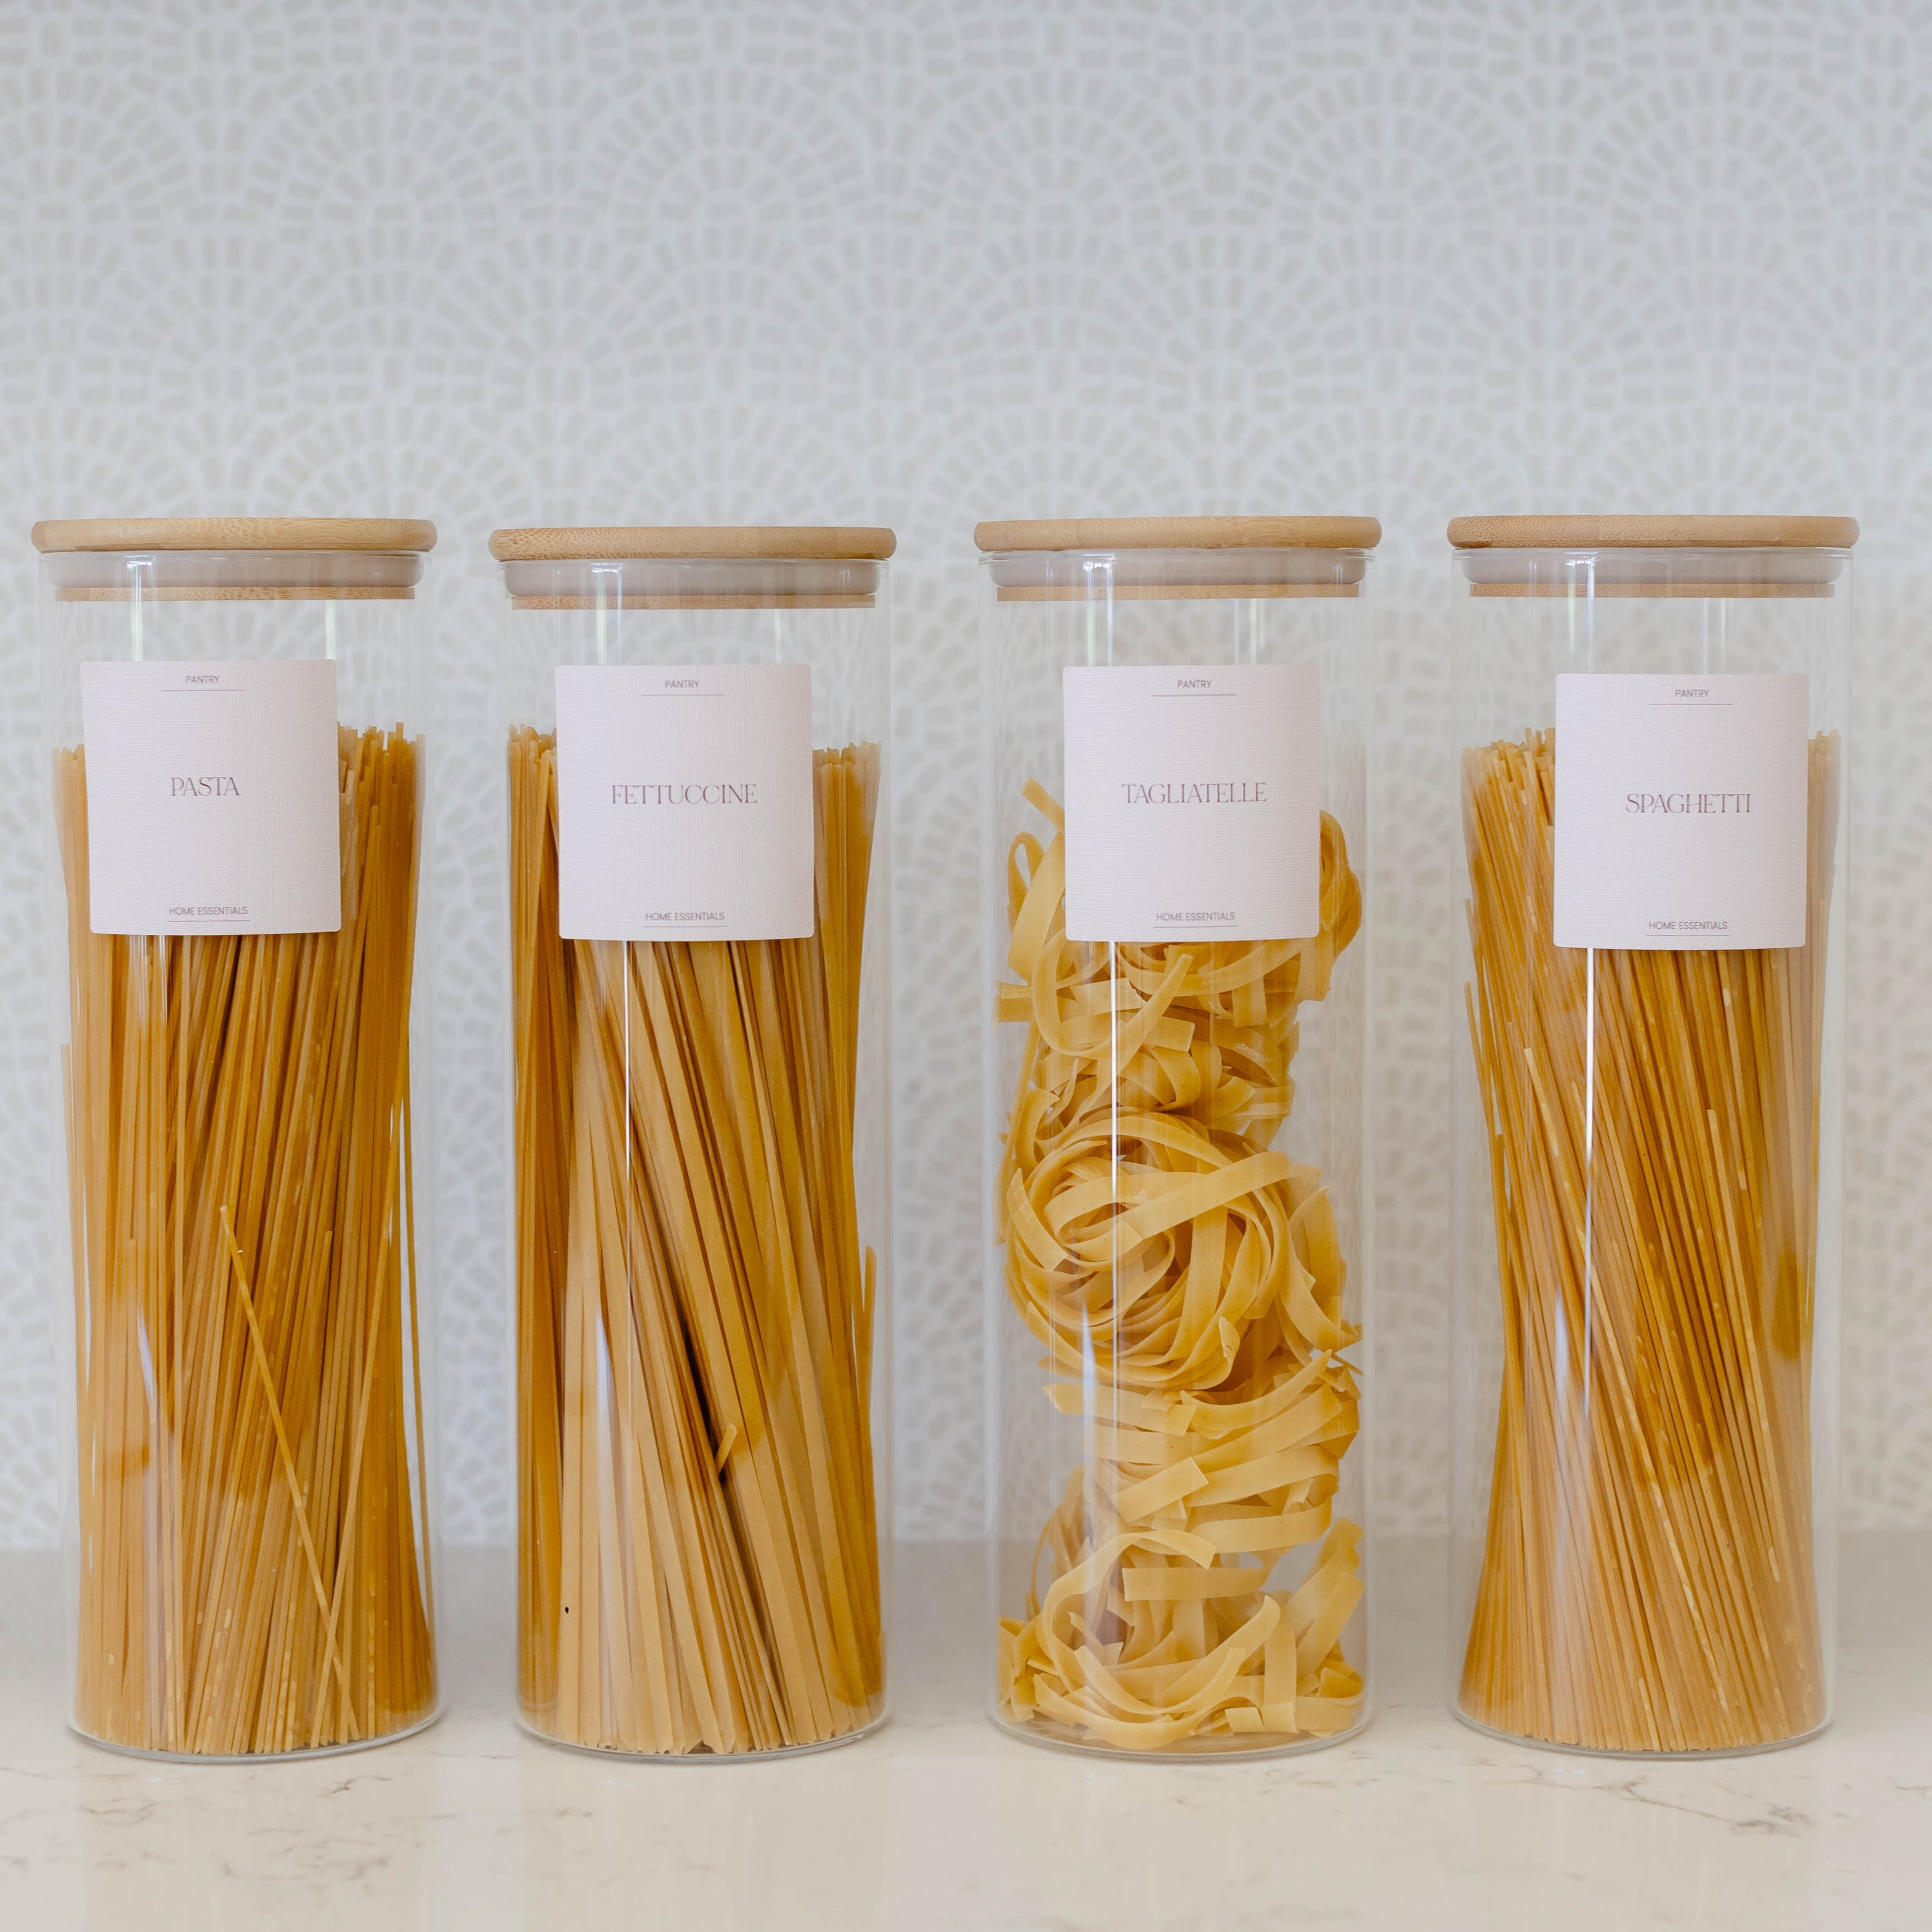 1.6L glass spaghetti jar by Pretty Little Designs, ideal for storing spaghetti and fettuccine.